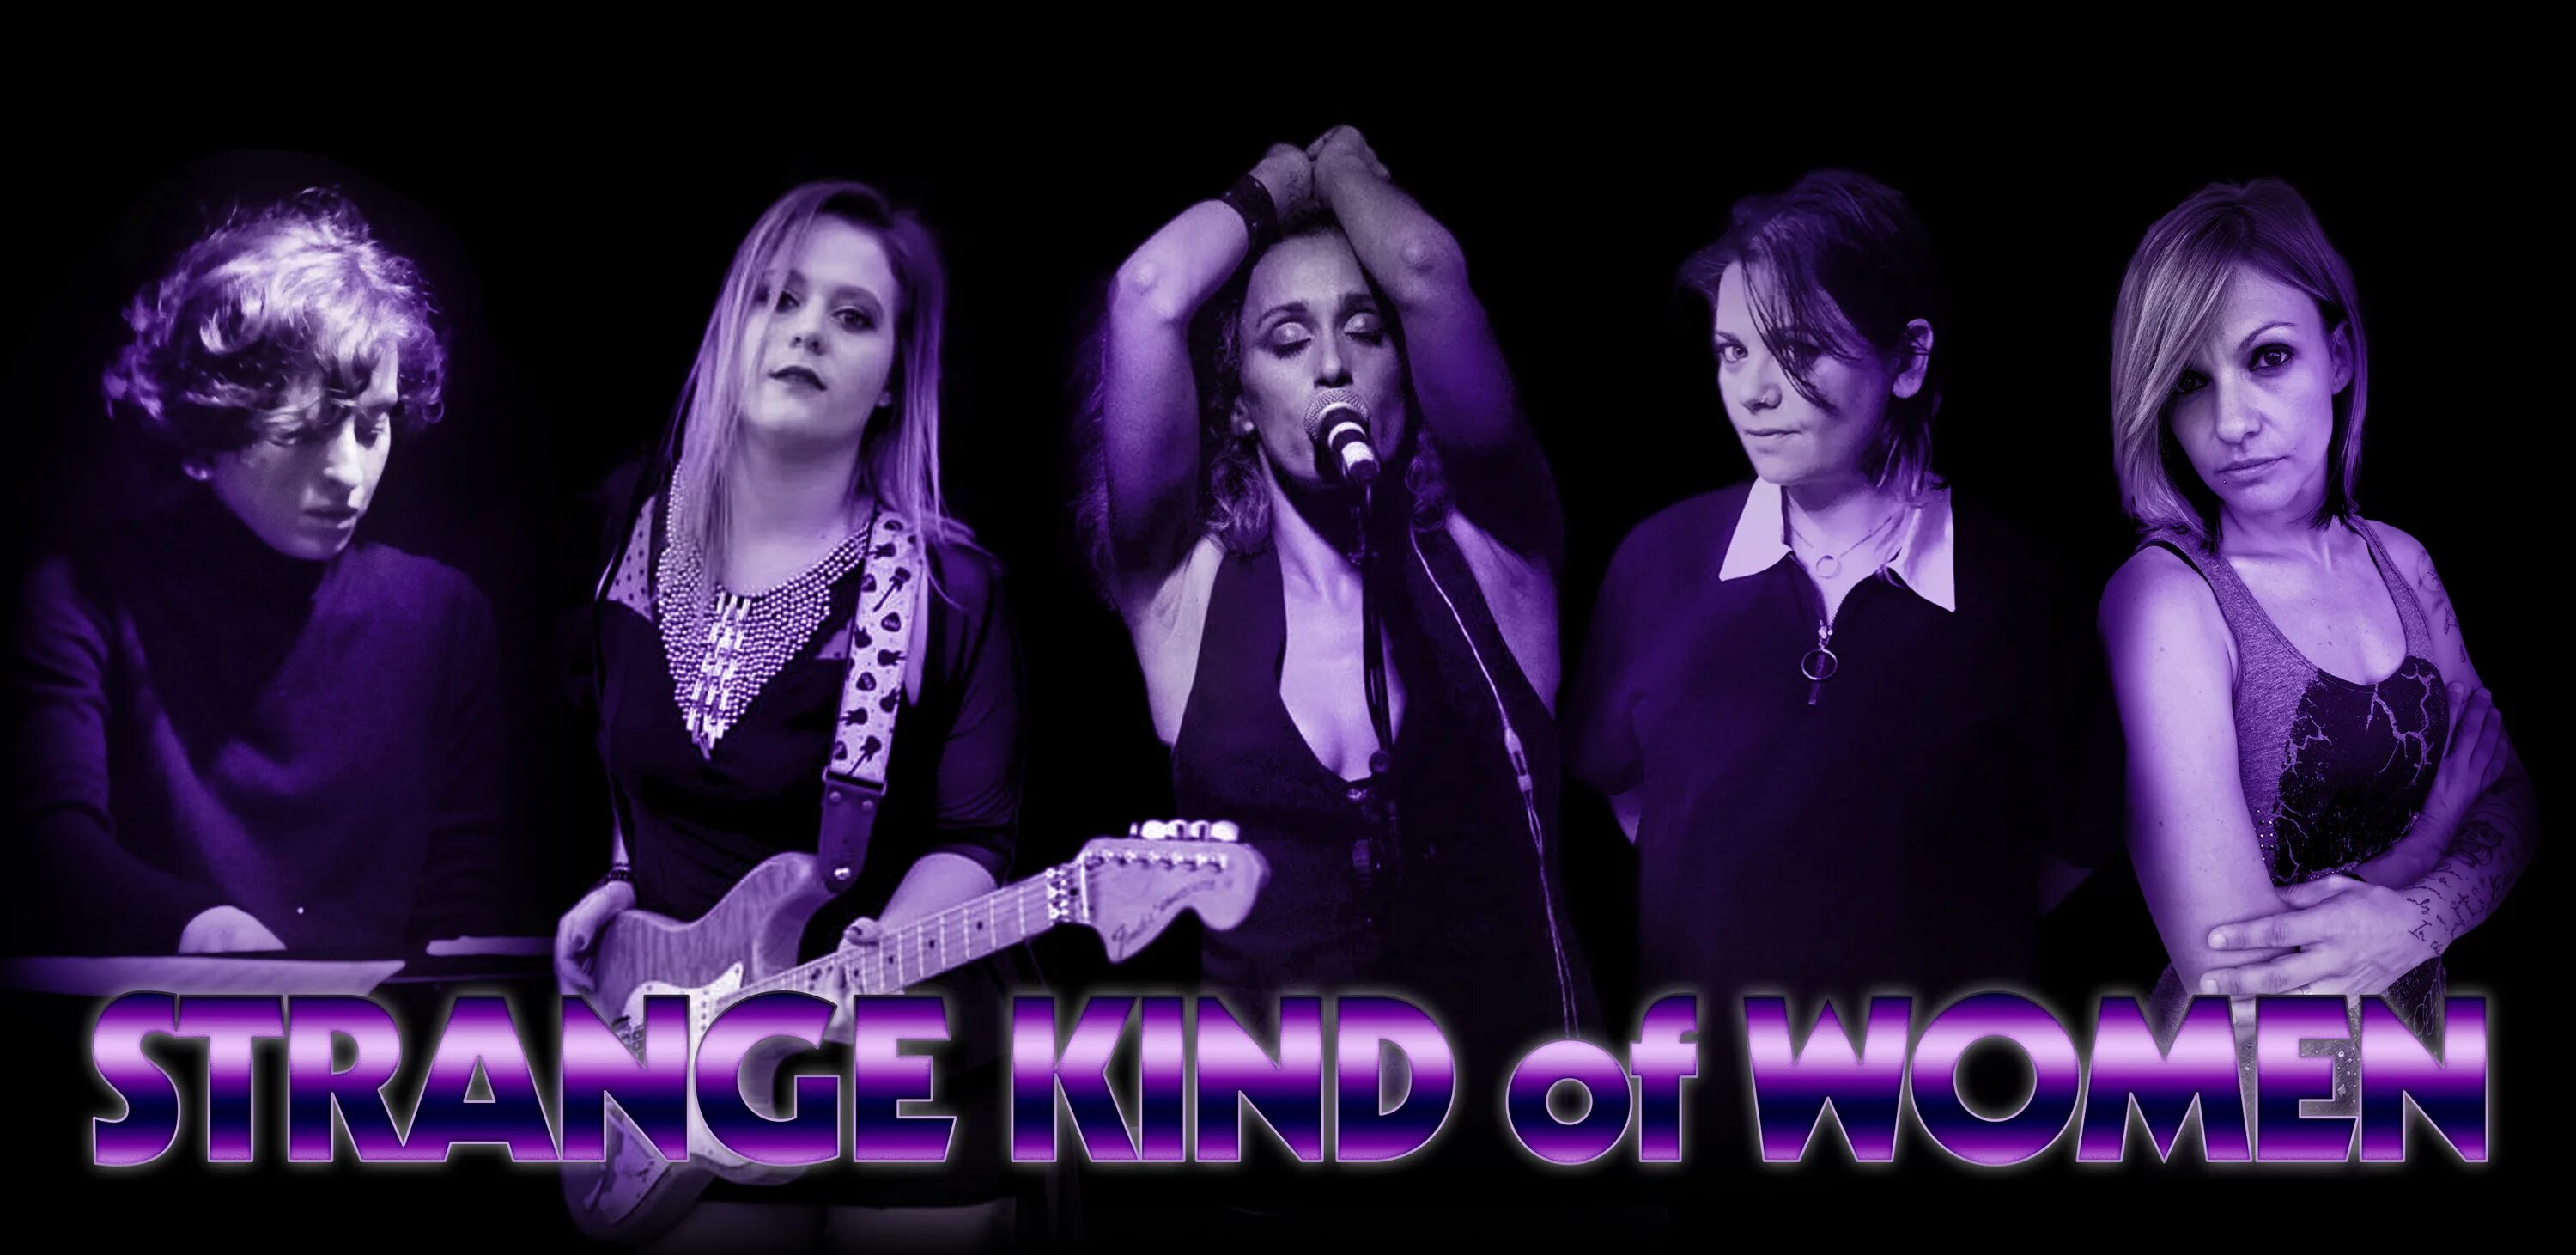 Women are strange. Strange kind of woman женская группа. Strange kind of women итальянская группа состав. Deep Purple Strange kind of woman. Итальянская рок-группа " Strange kind of woman ".